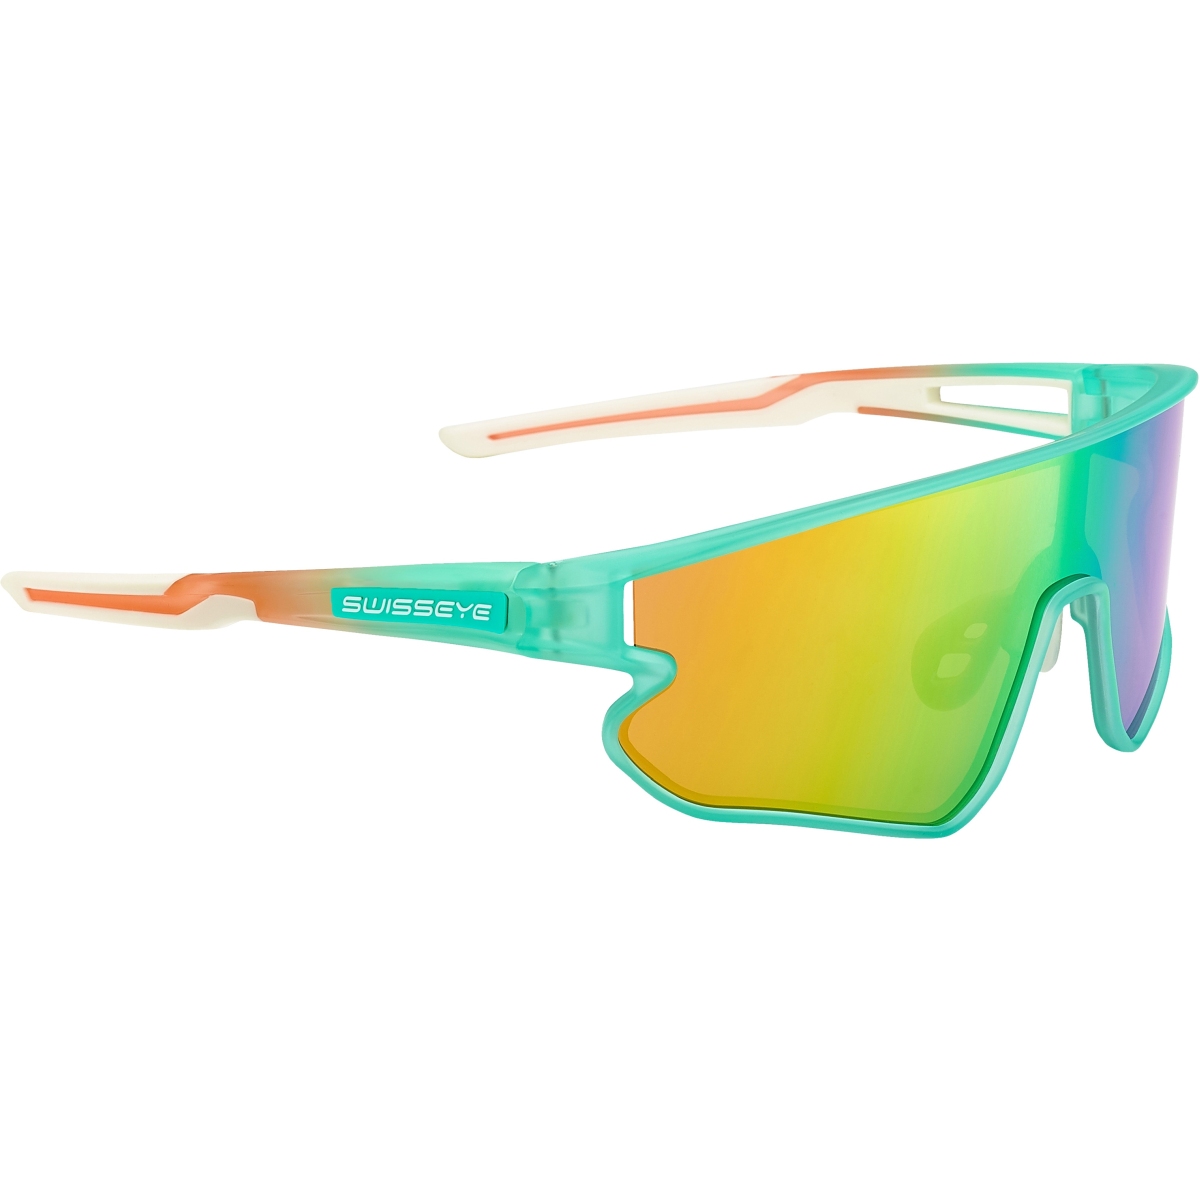 Picture of Swiss Eye Hurricane Glasses - Rainbow Turquoise/White - Brown Orange Revo 13005